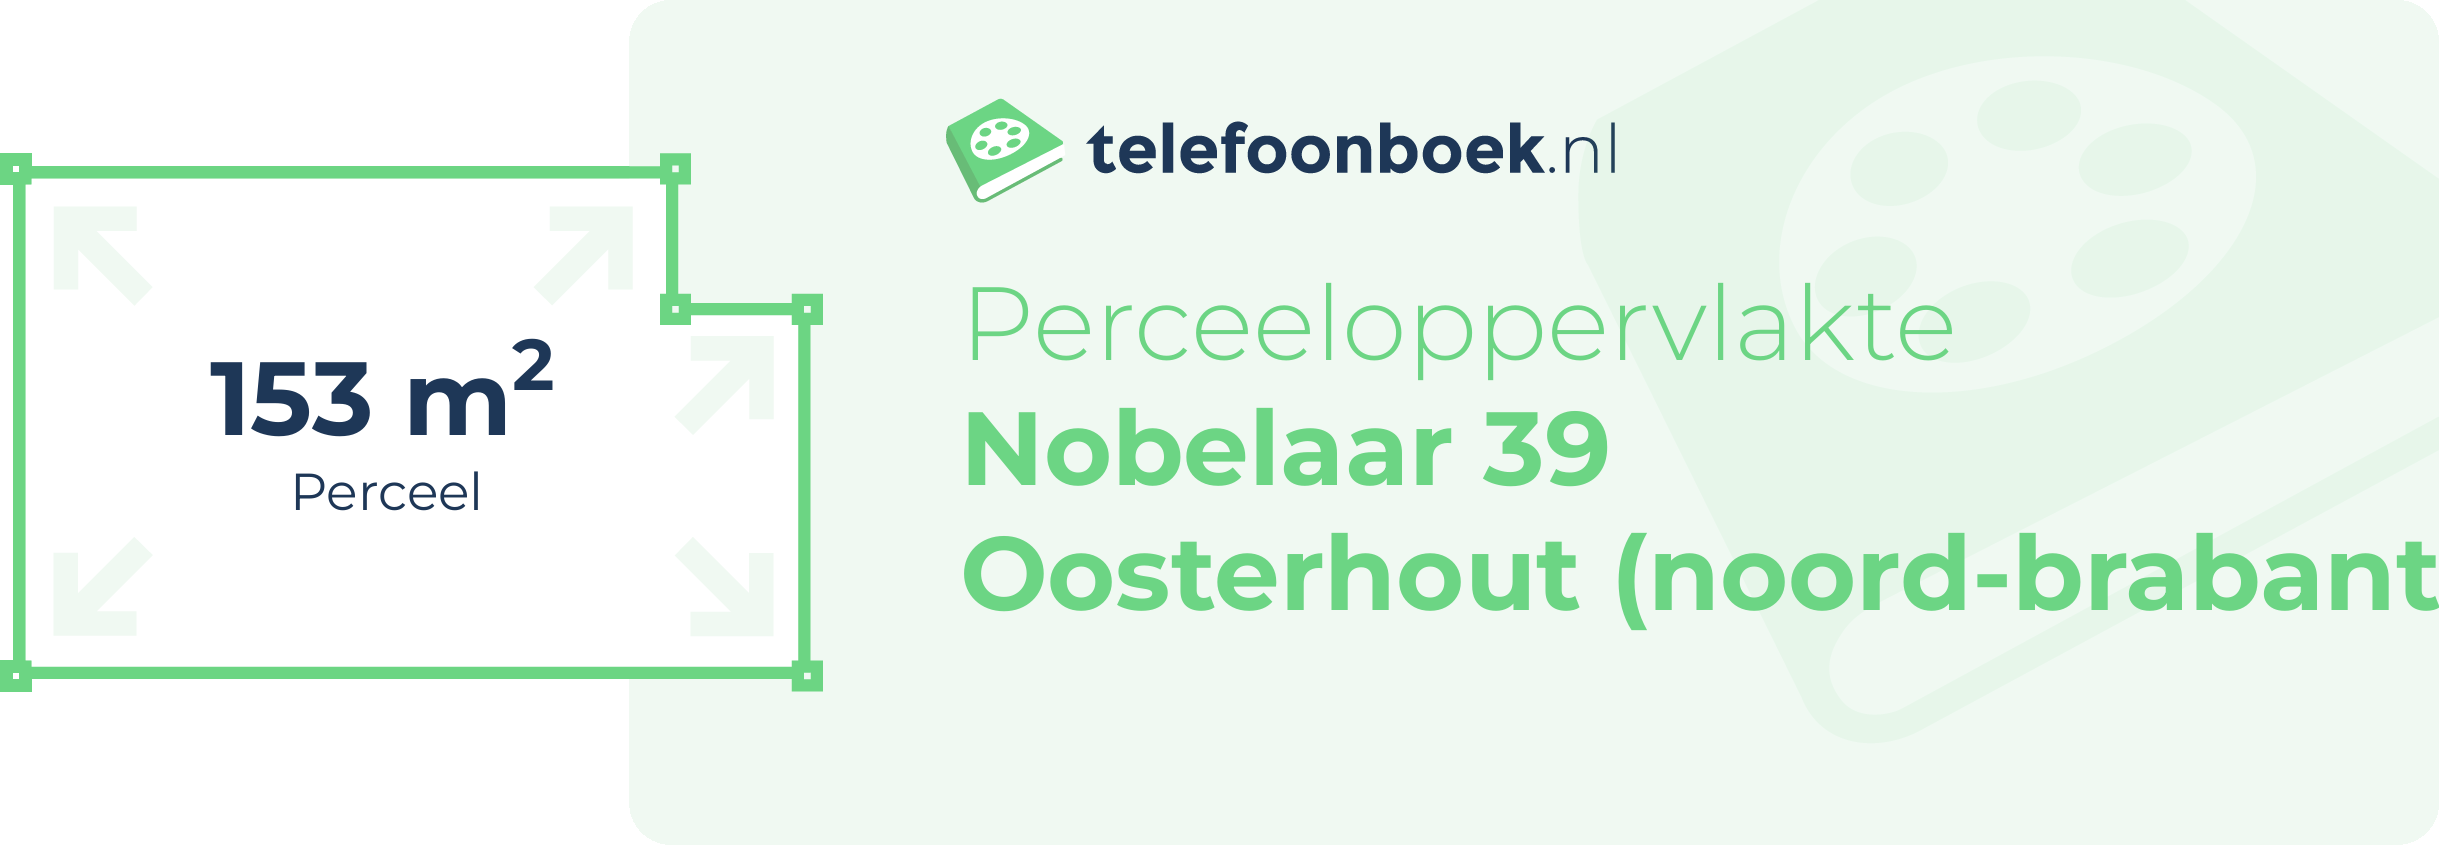 Perceeloppervlakte Nobelaar 39 Oosterhout (Noord-Brabant)